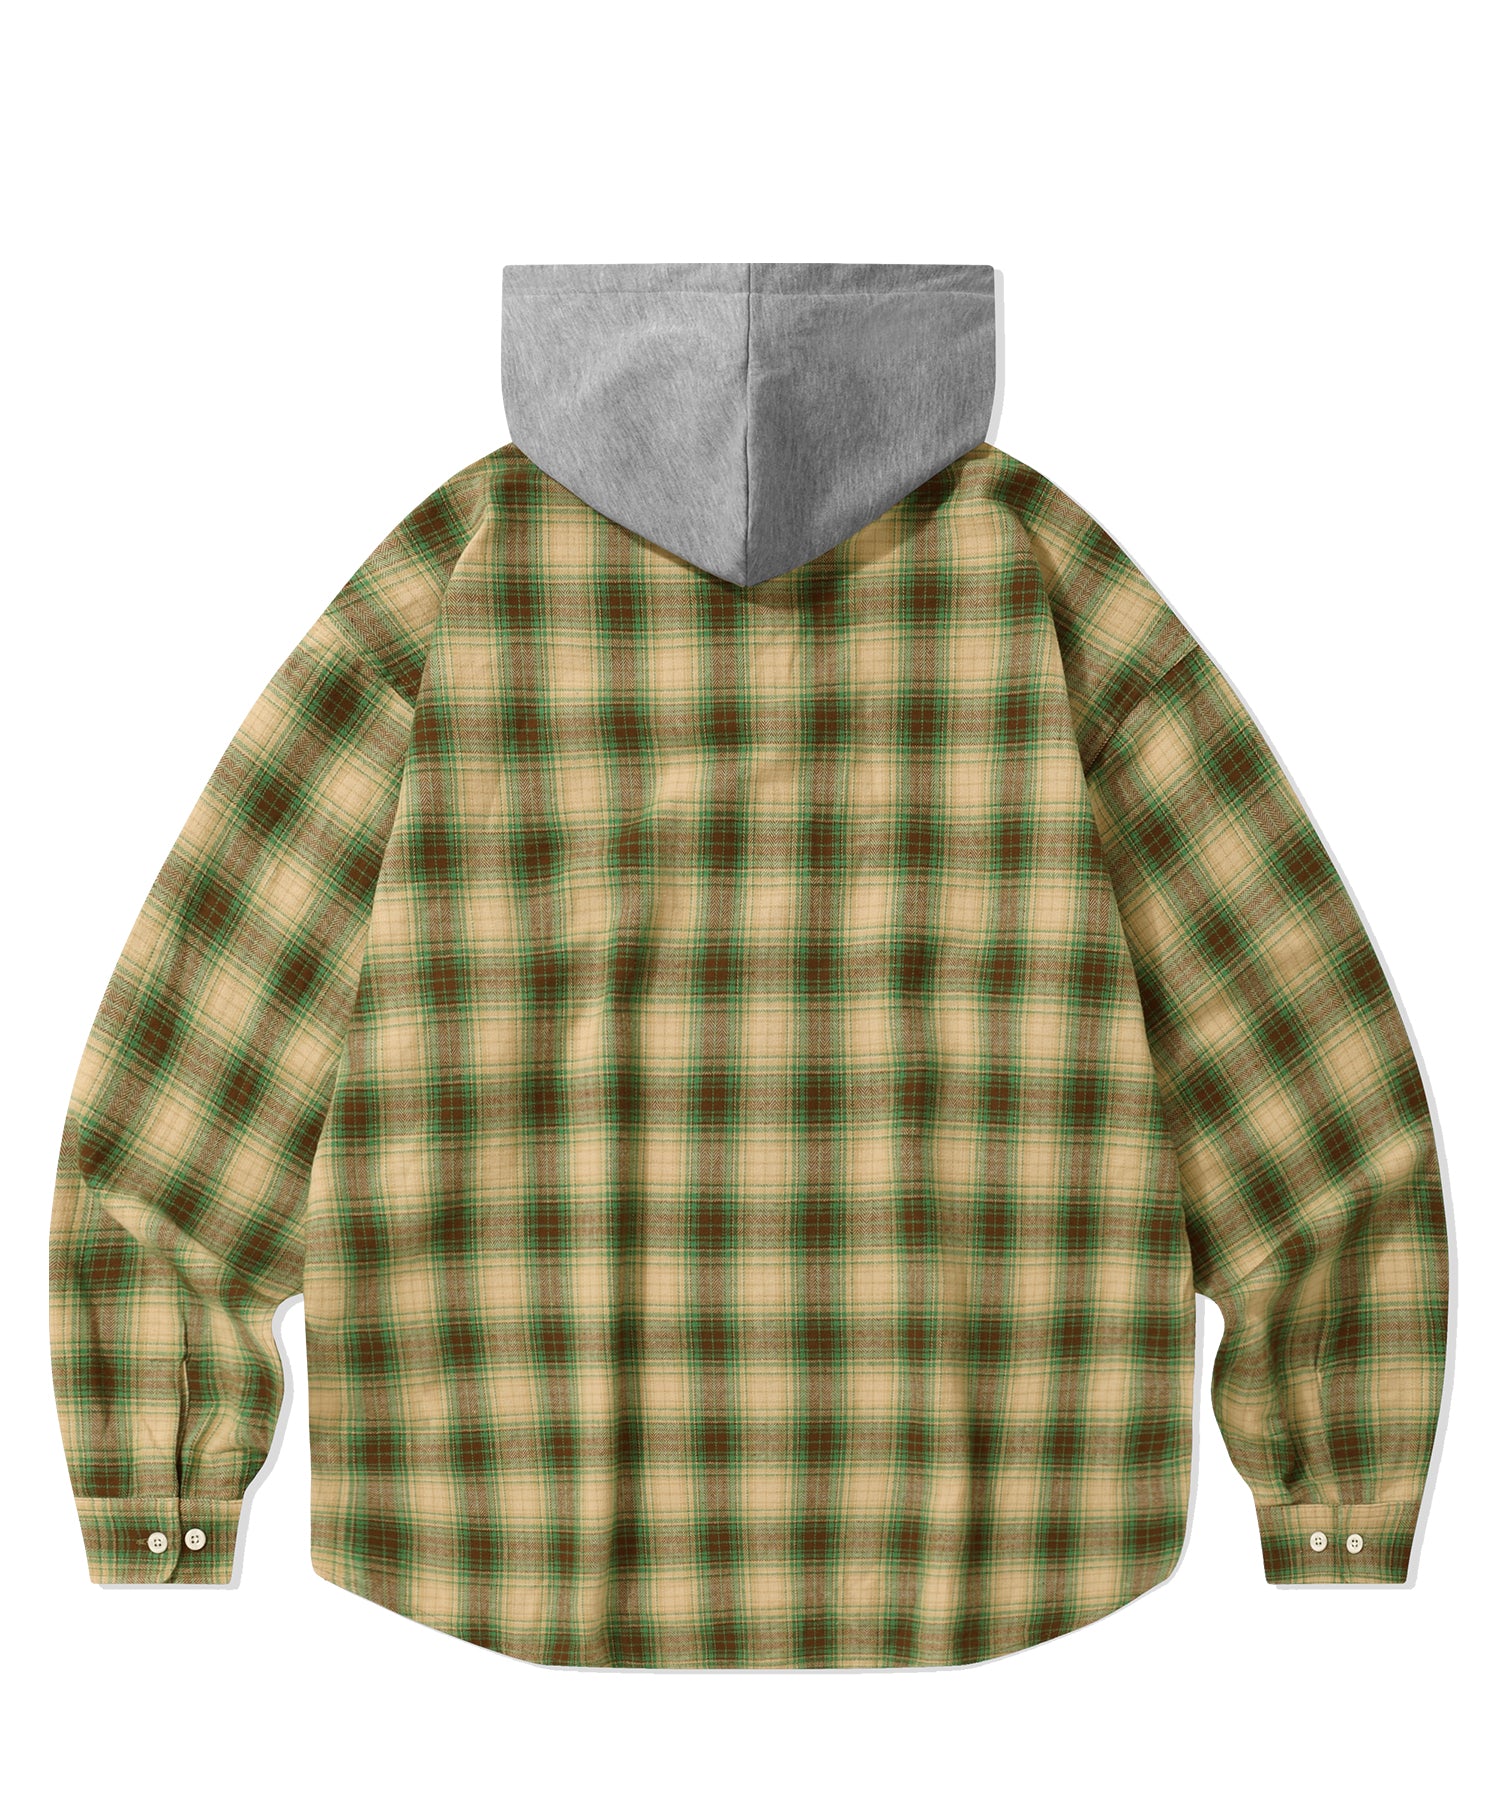 Two Pocket Hoodie Check Shirt-Green